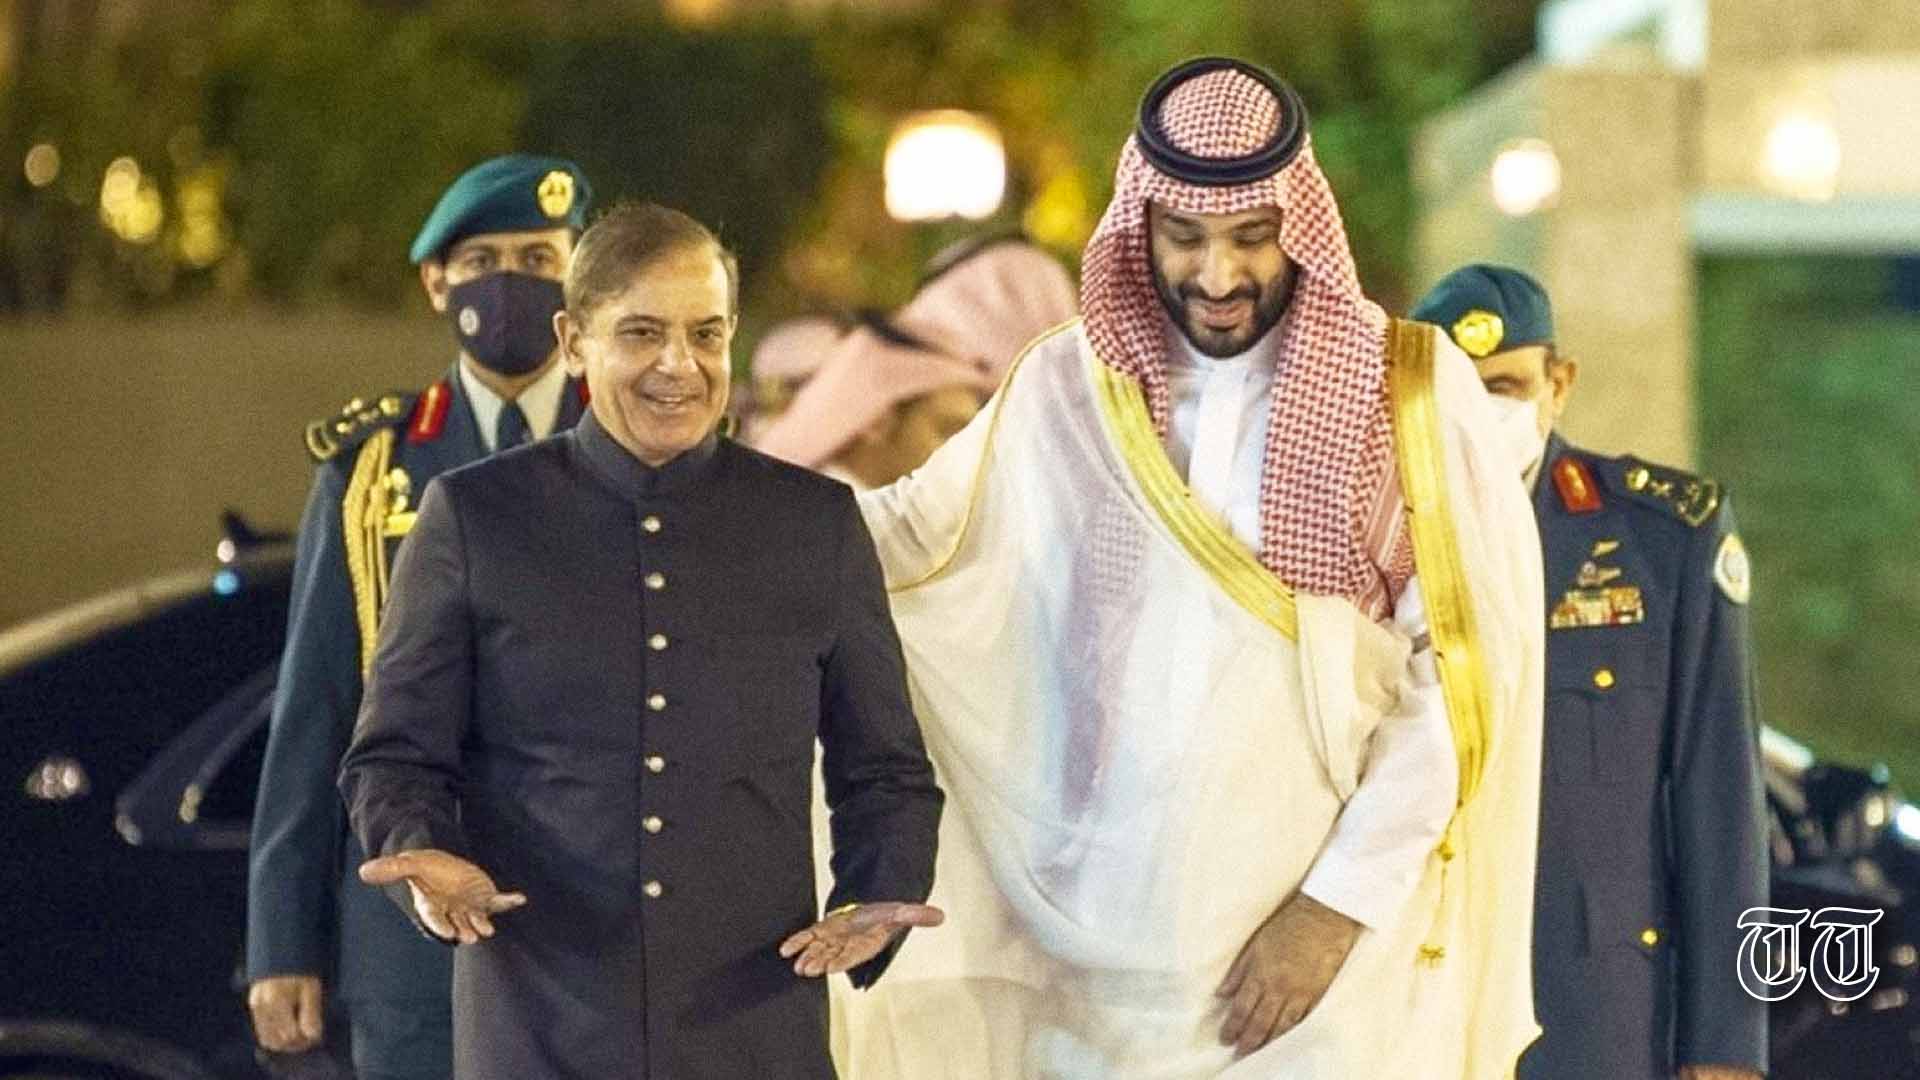 Prime Minister Shehbaz Sharif is shown alongside Saudi Crown Prince Mohammed bin Salman at Jeddah in April 2022. — FILE/ROYAL COURT OF SAUDI ARABIA